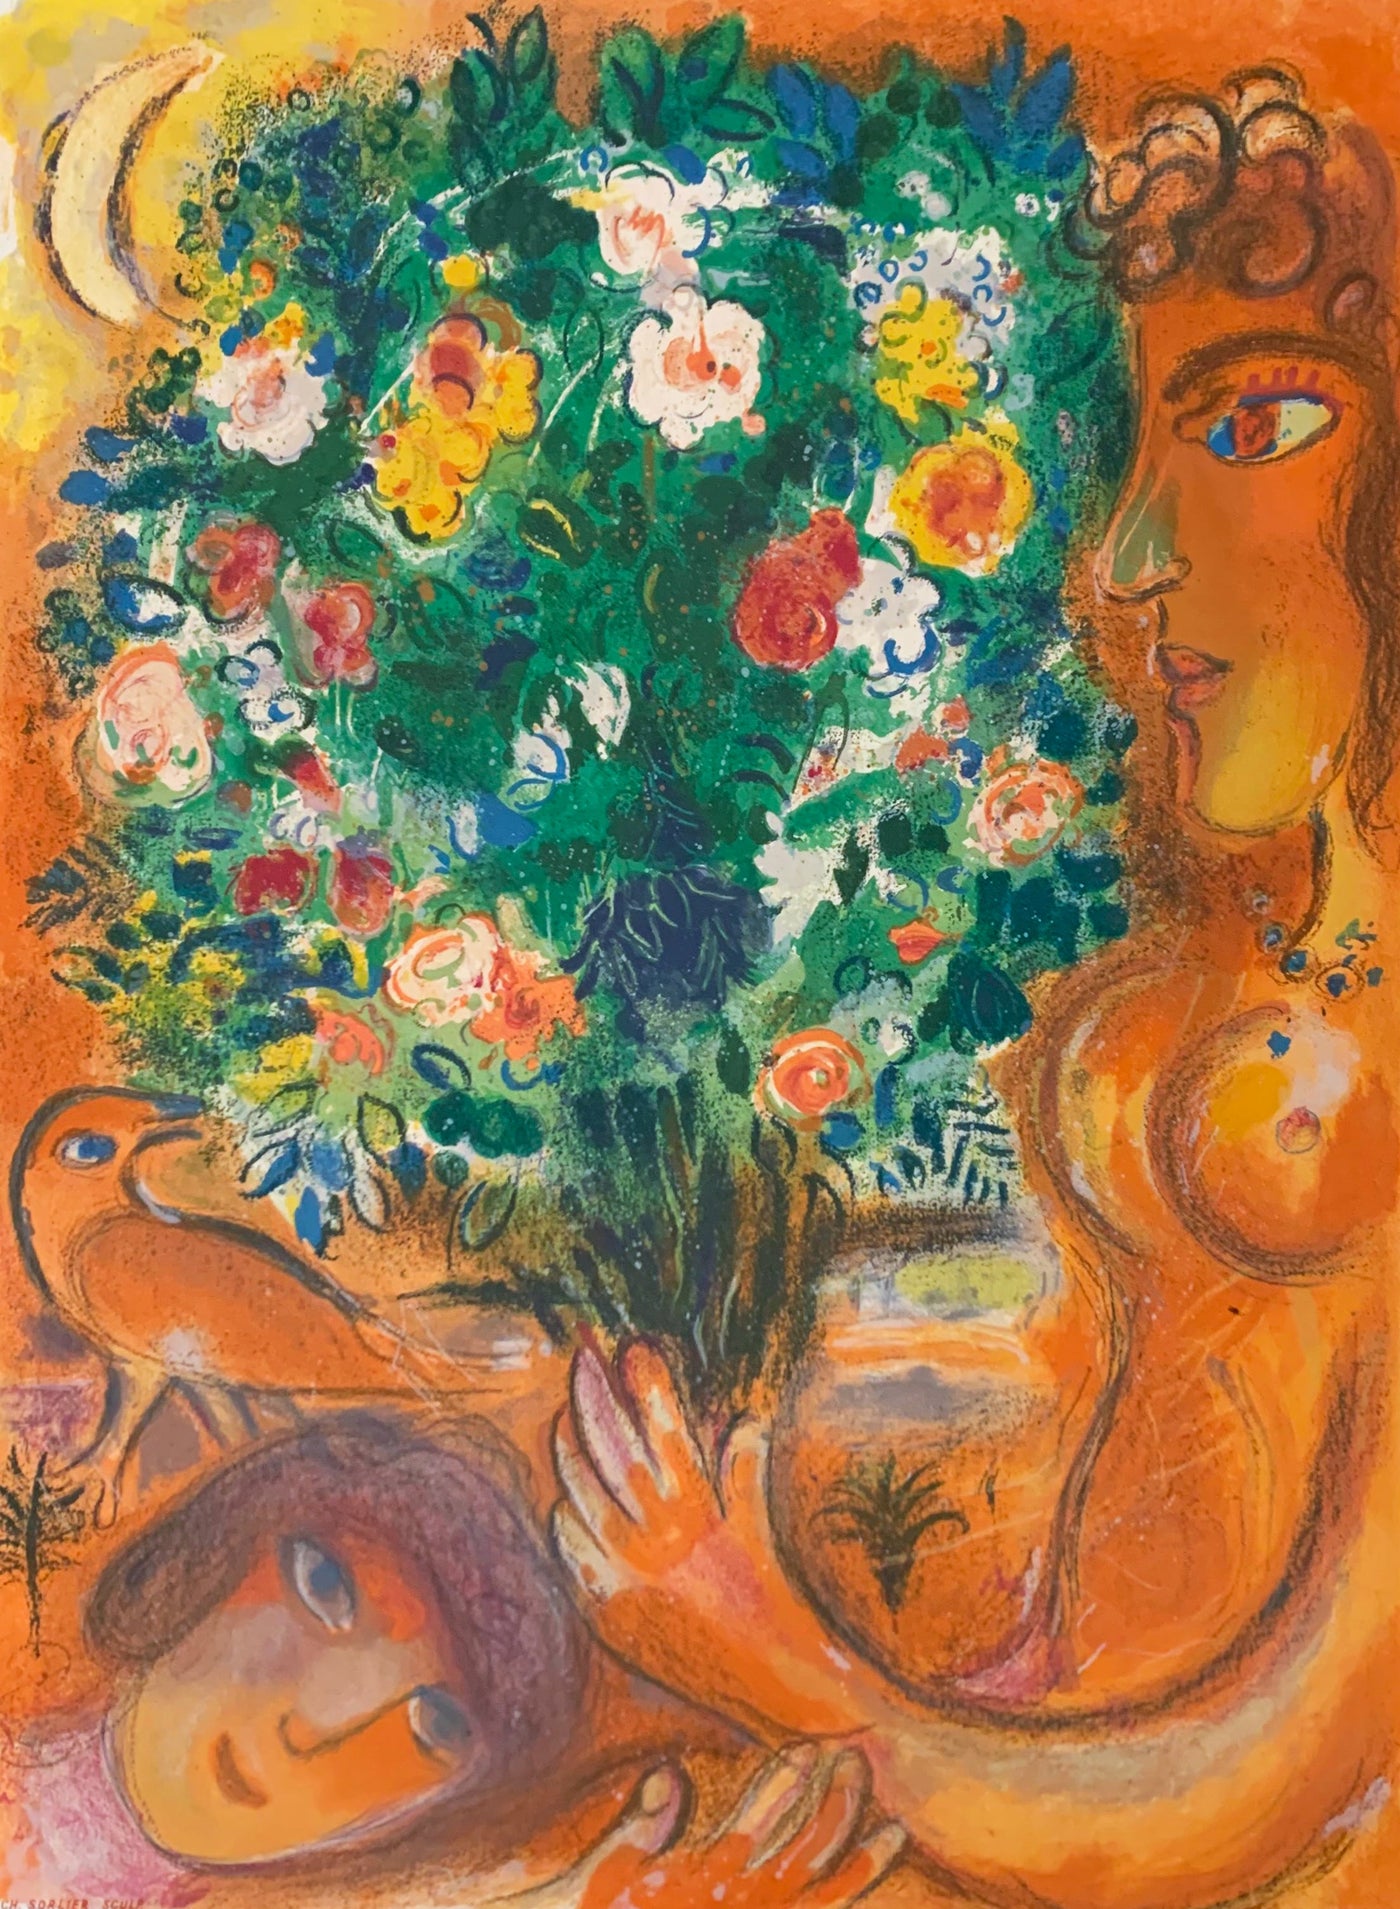 Charles Sorlier after Marc Chagall Femme au Bouquet (Women with Bouquet) (CS 37)